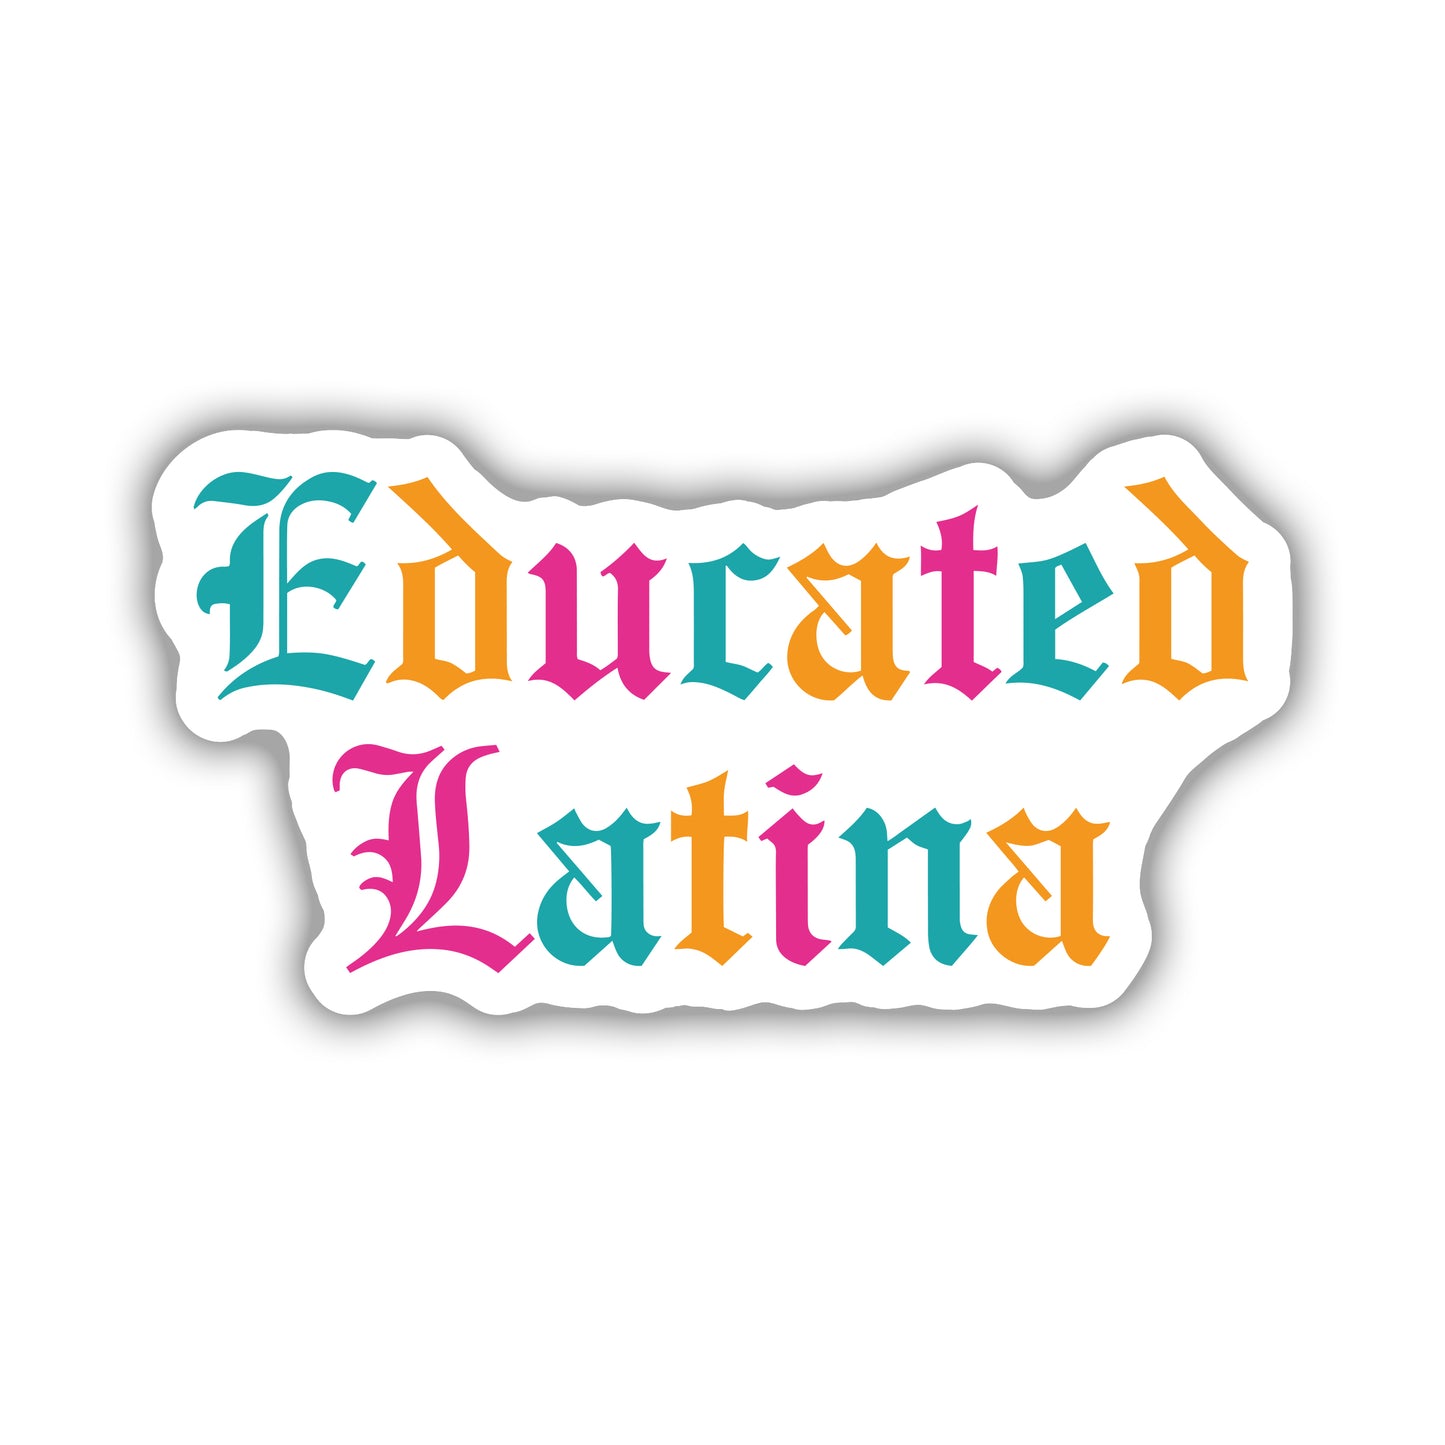 Educated Latina Vinyl Sticker